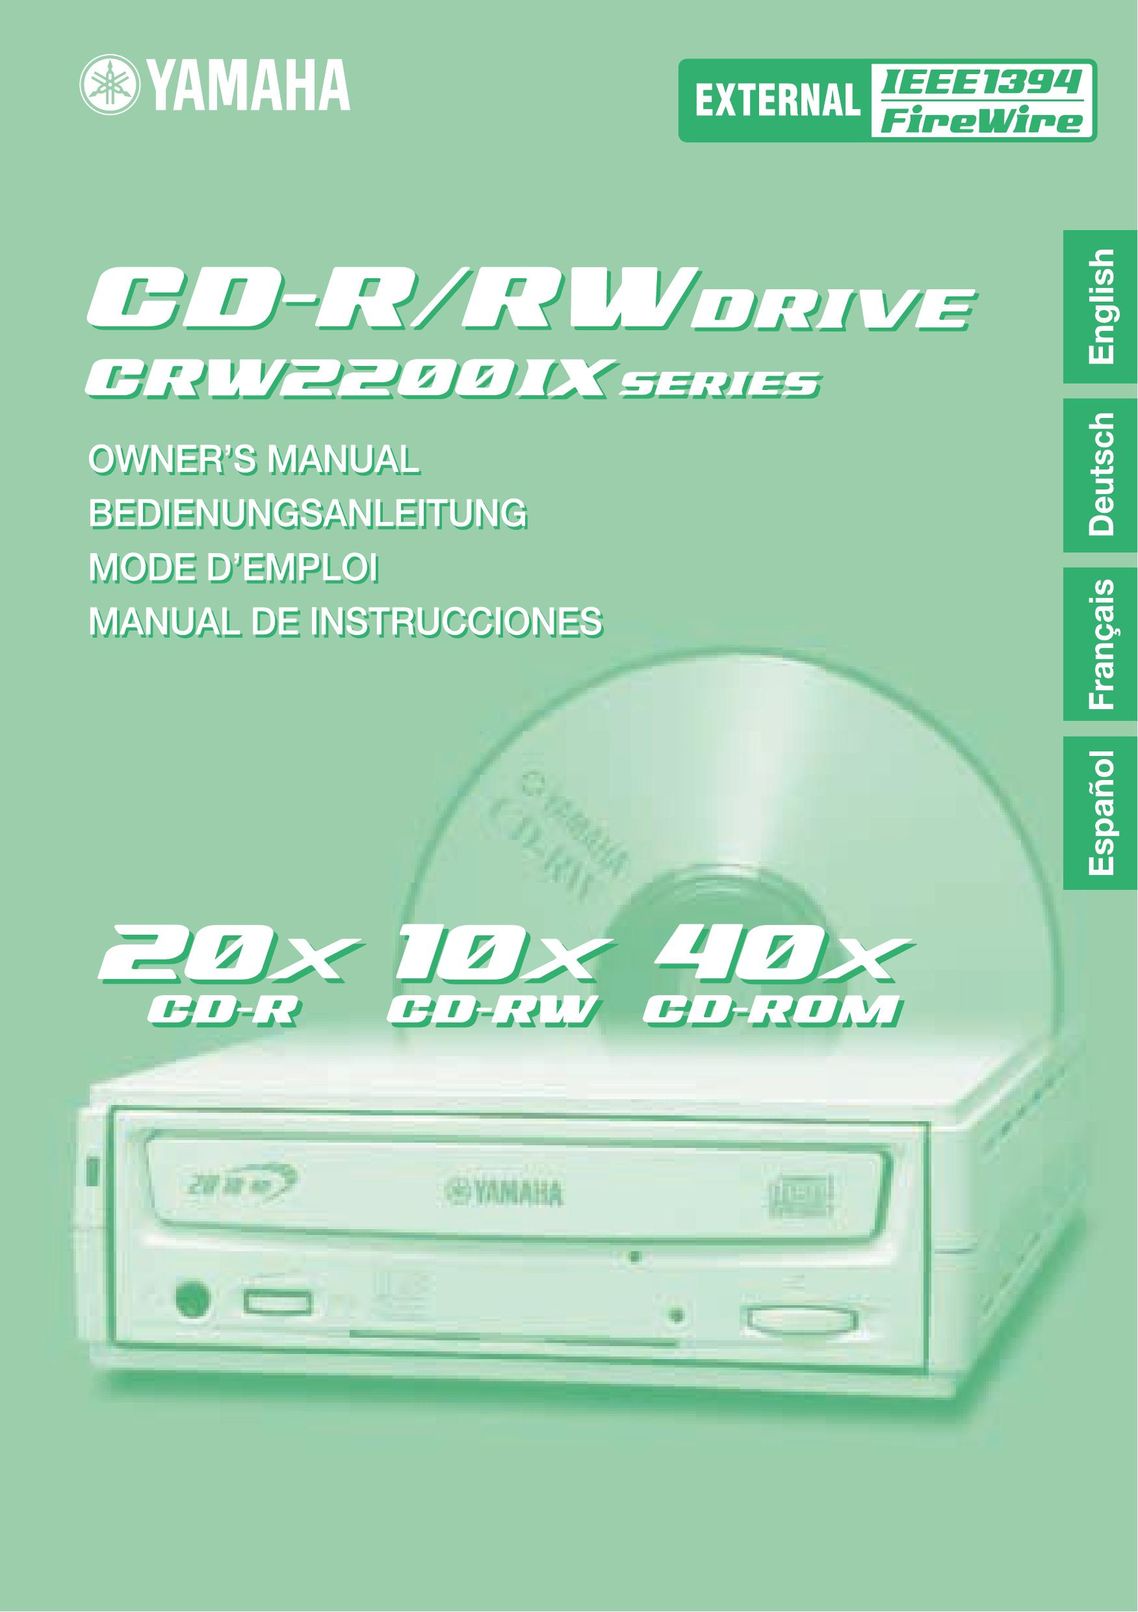 Yamaha CRW2200IX Computer Drive User Manual